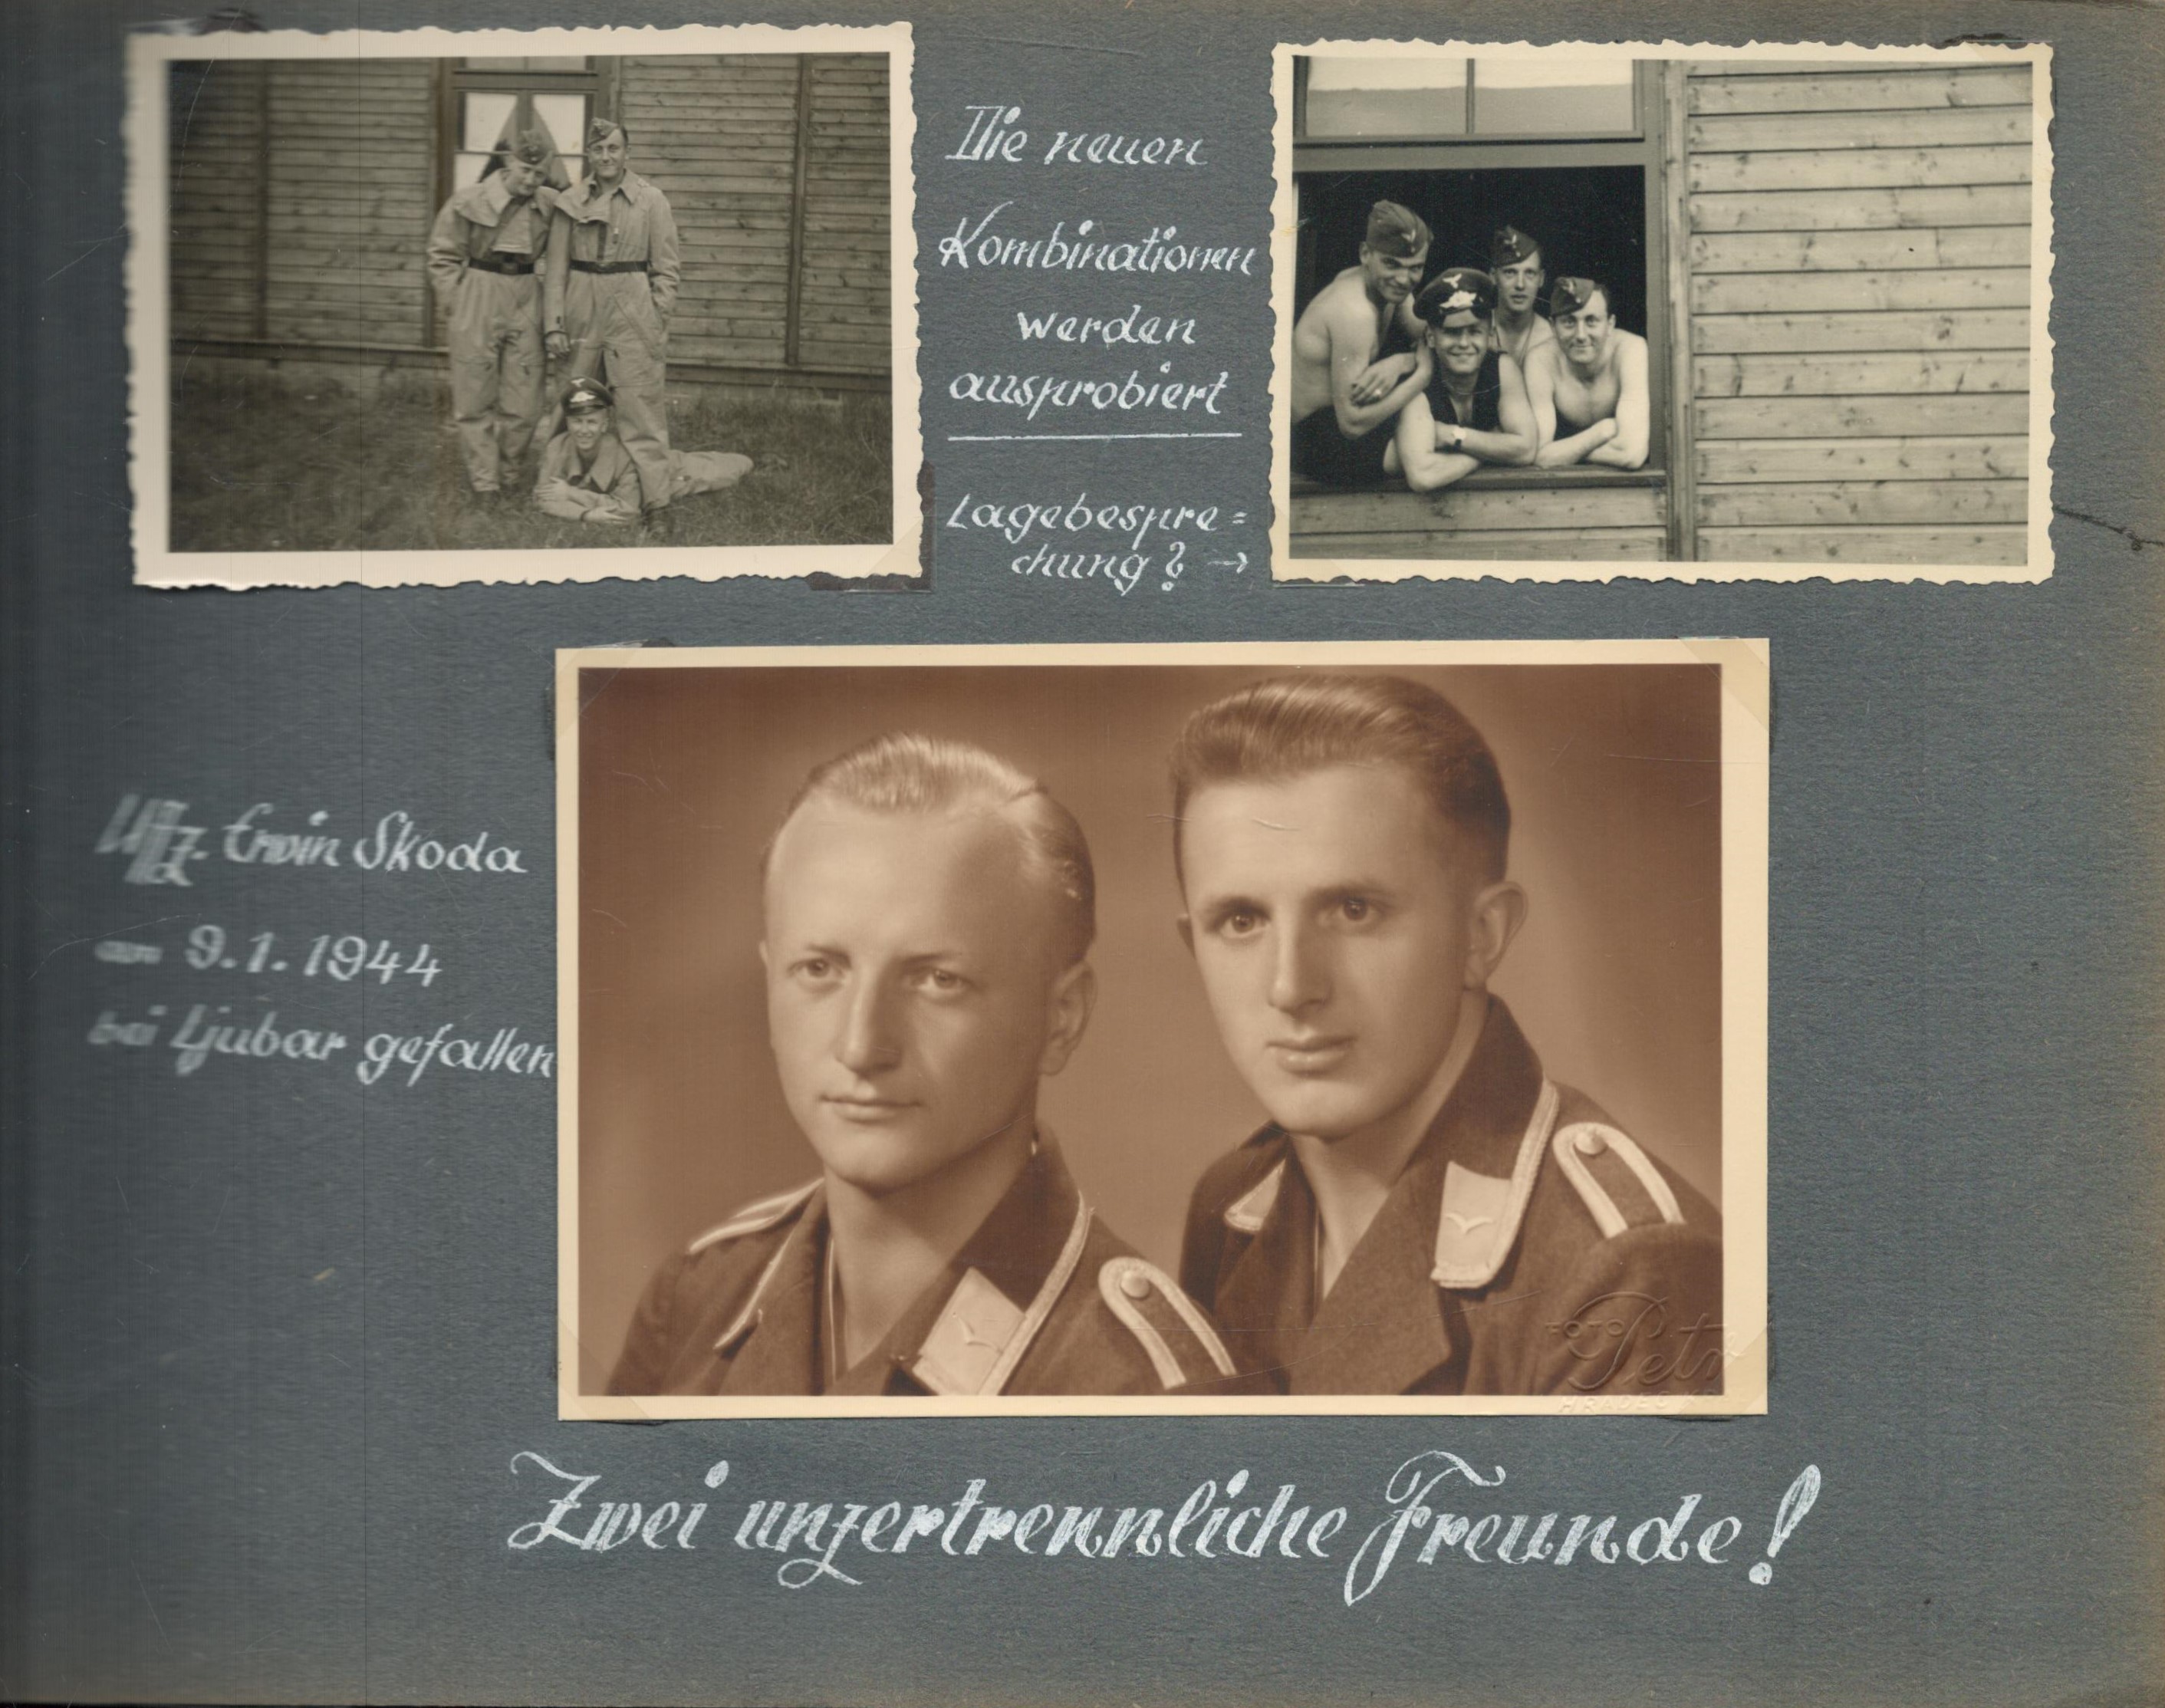 Luftwaffe Stuka Operator photo album of the career and war memories of Erich Heine rear gunner and - Image 7 of 12